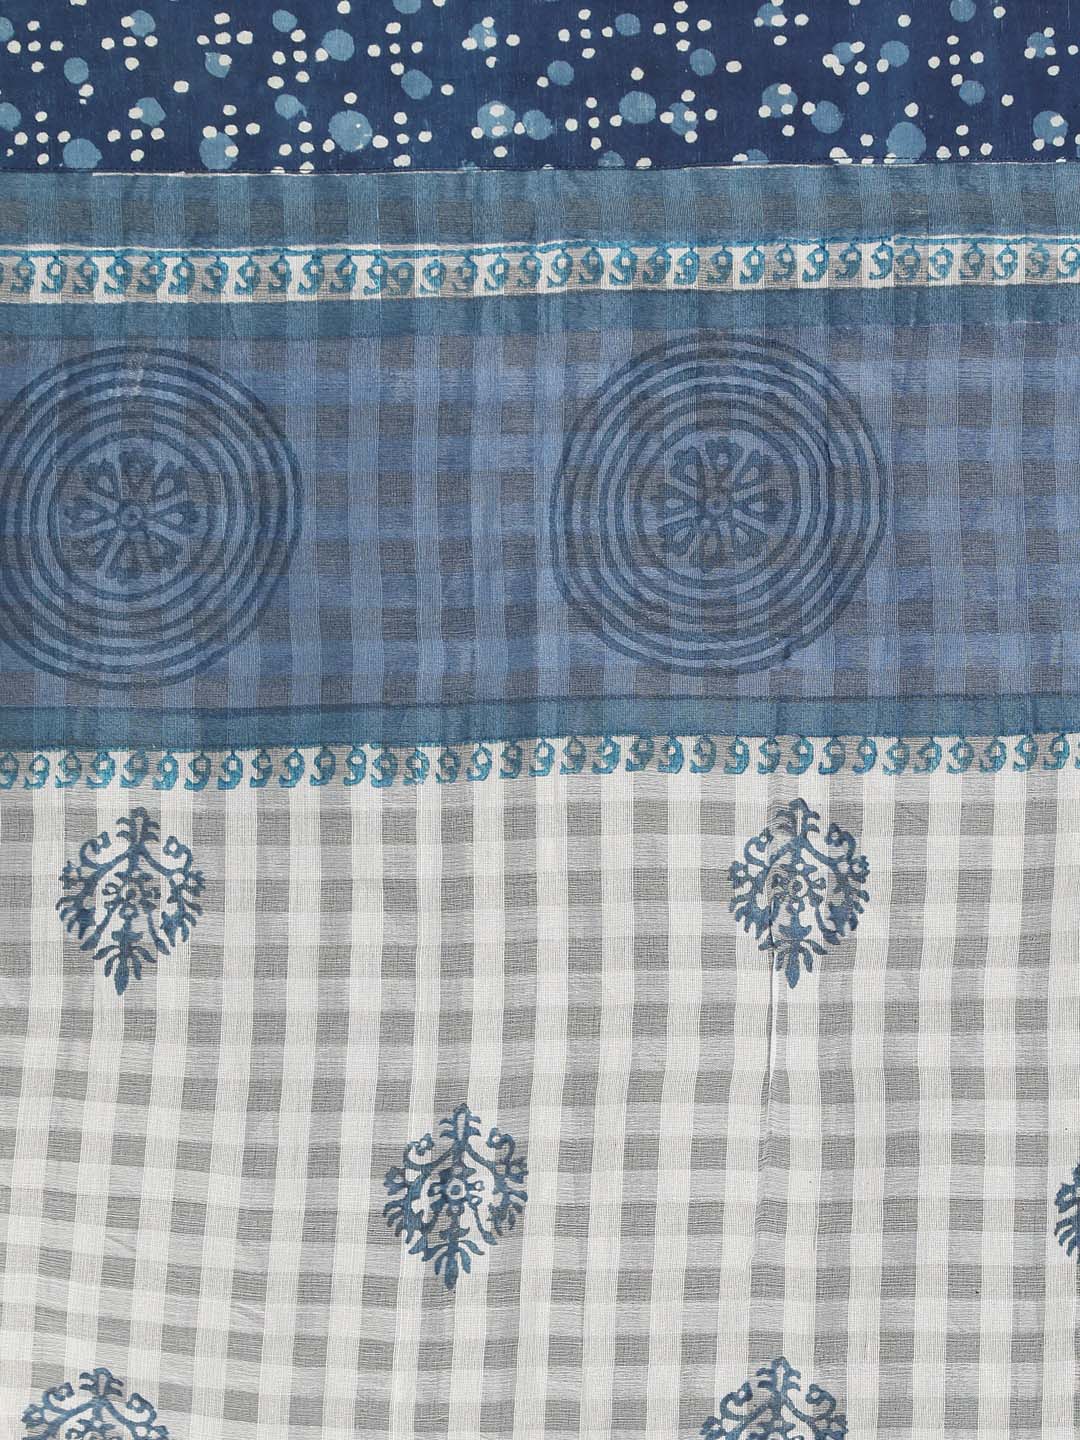 Indethnic Printed Cotton Blend Saree in blue - Saree Detail View